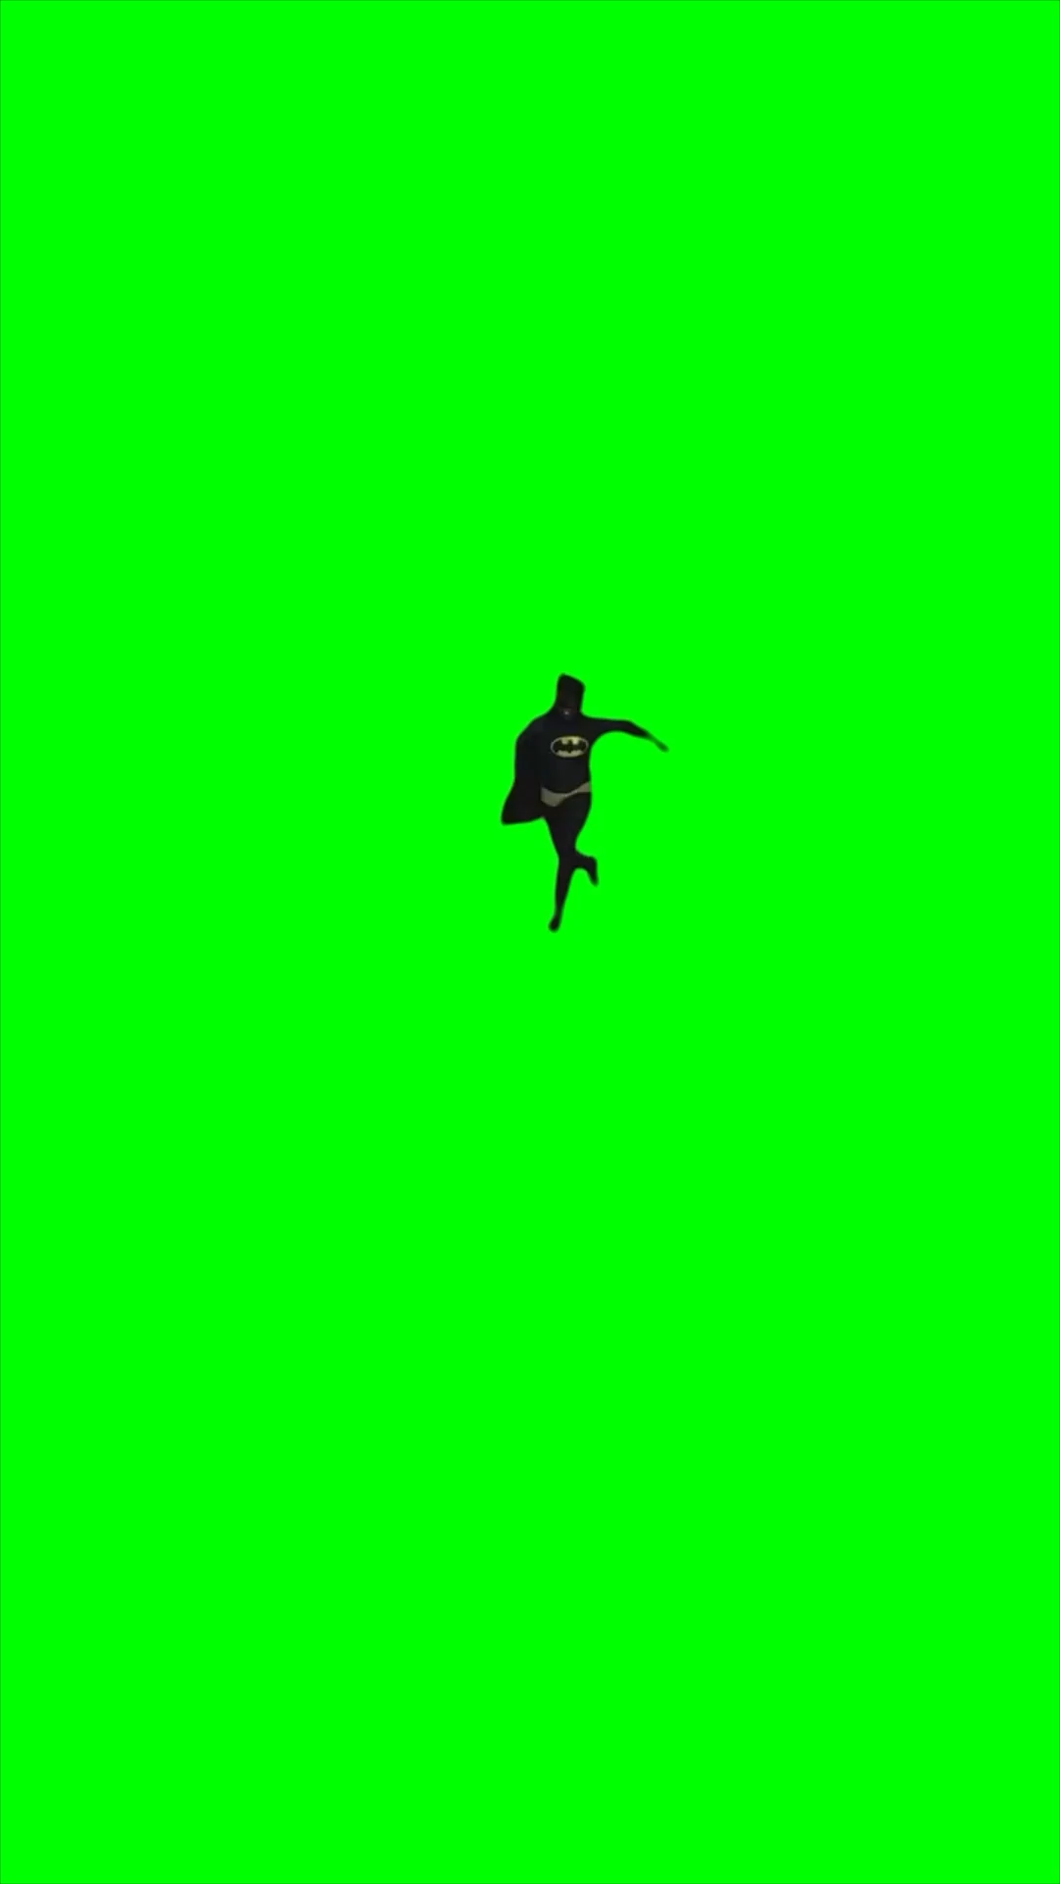 Batman Beach Jump (Green Screen)